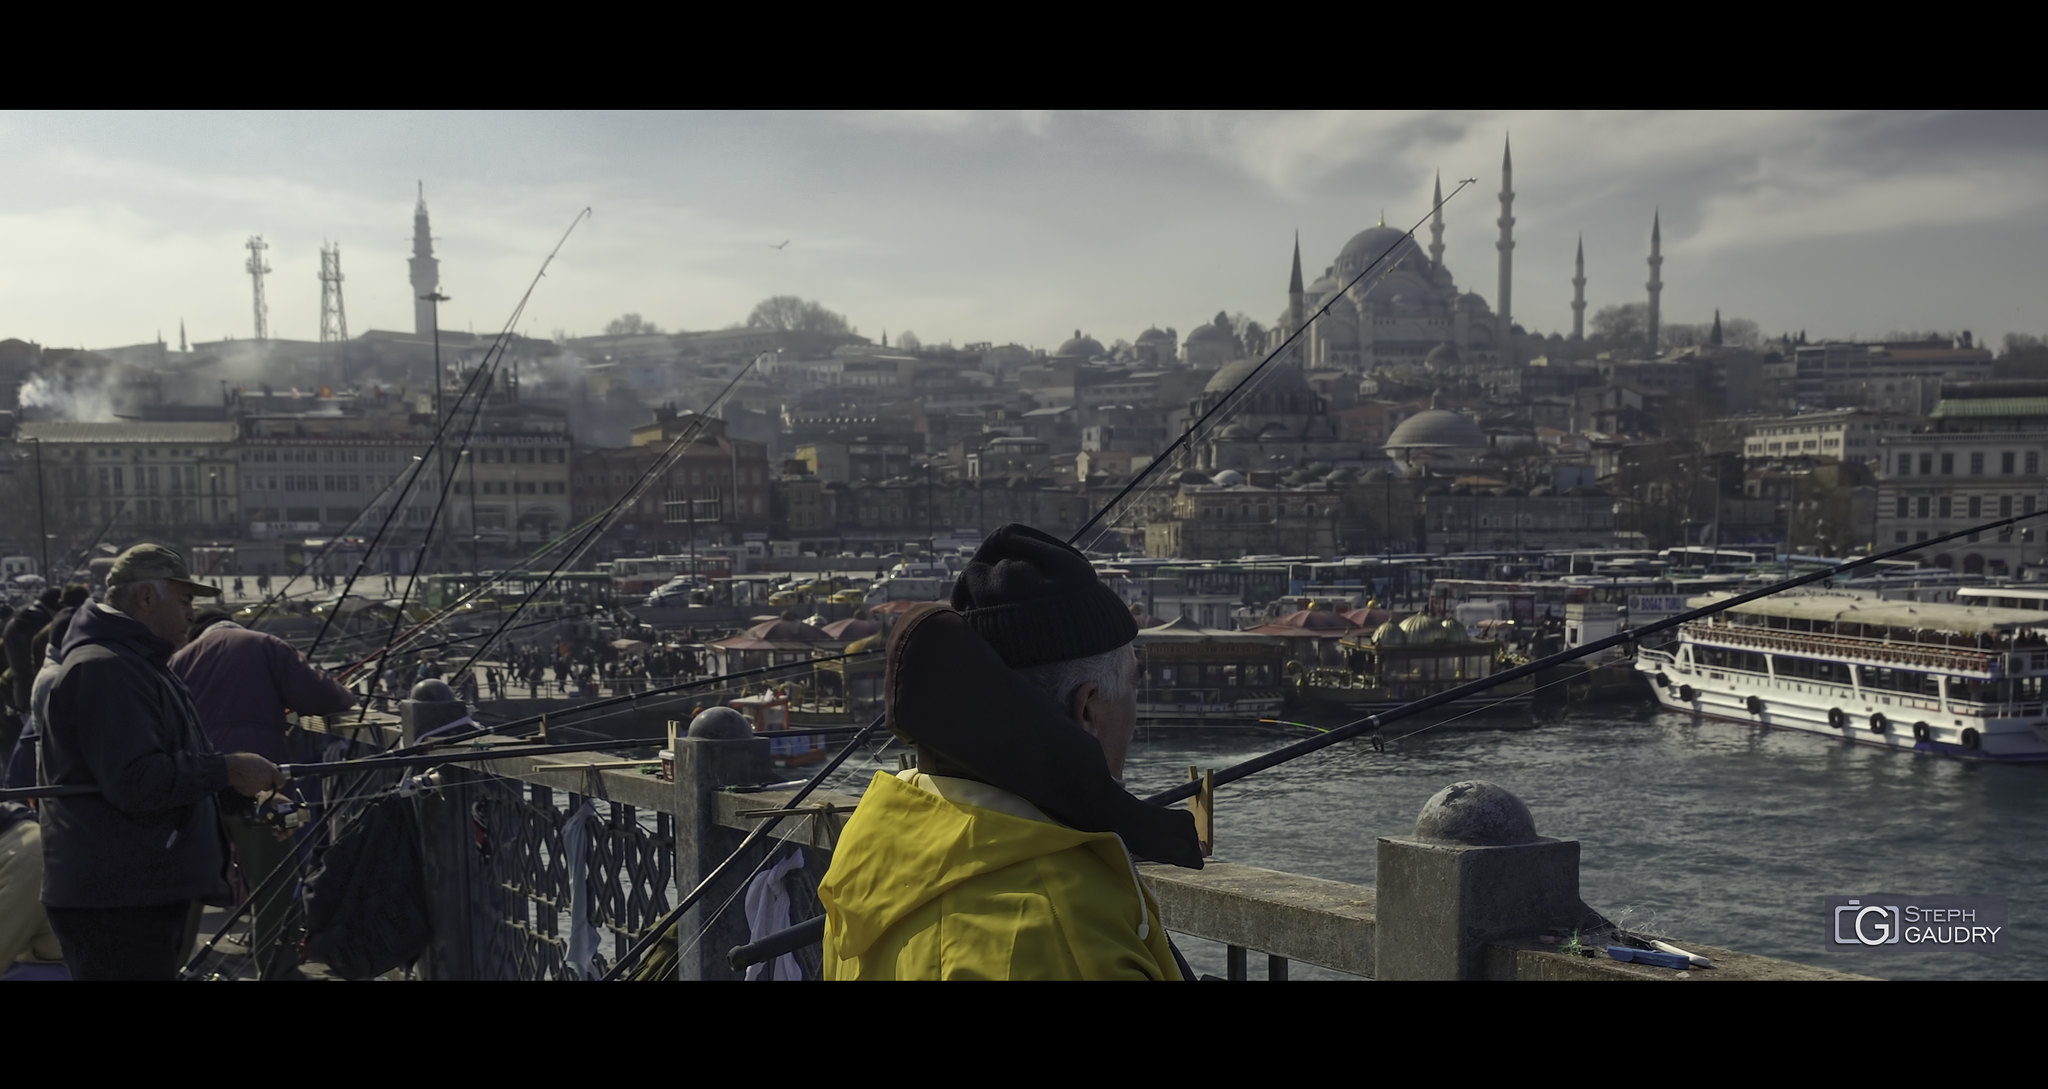 Istanbul, Fishermen on Galata Bridge (cinemascope version) [Klik om de diavoorstelling te starten]